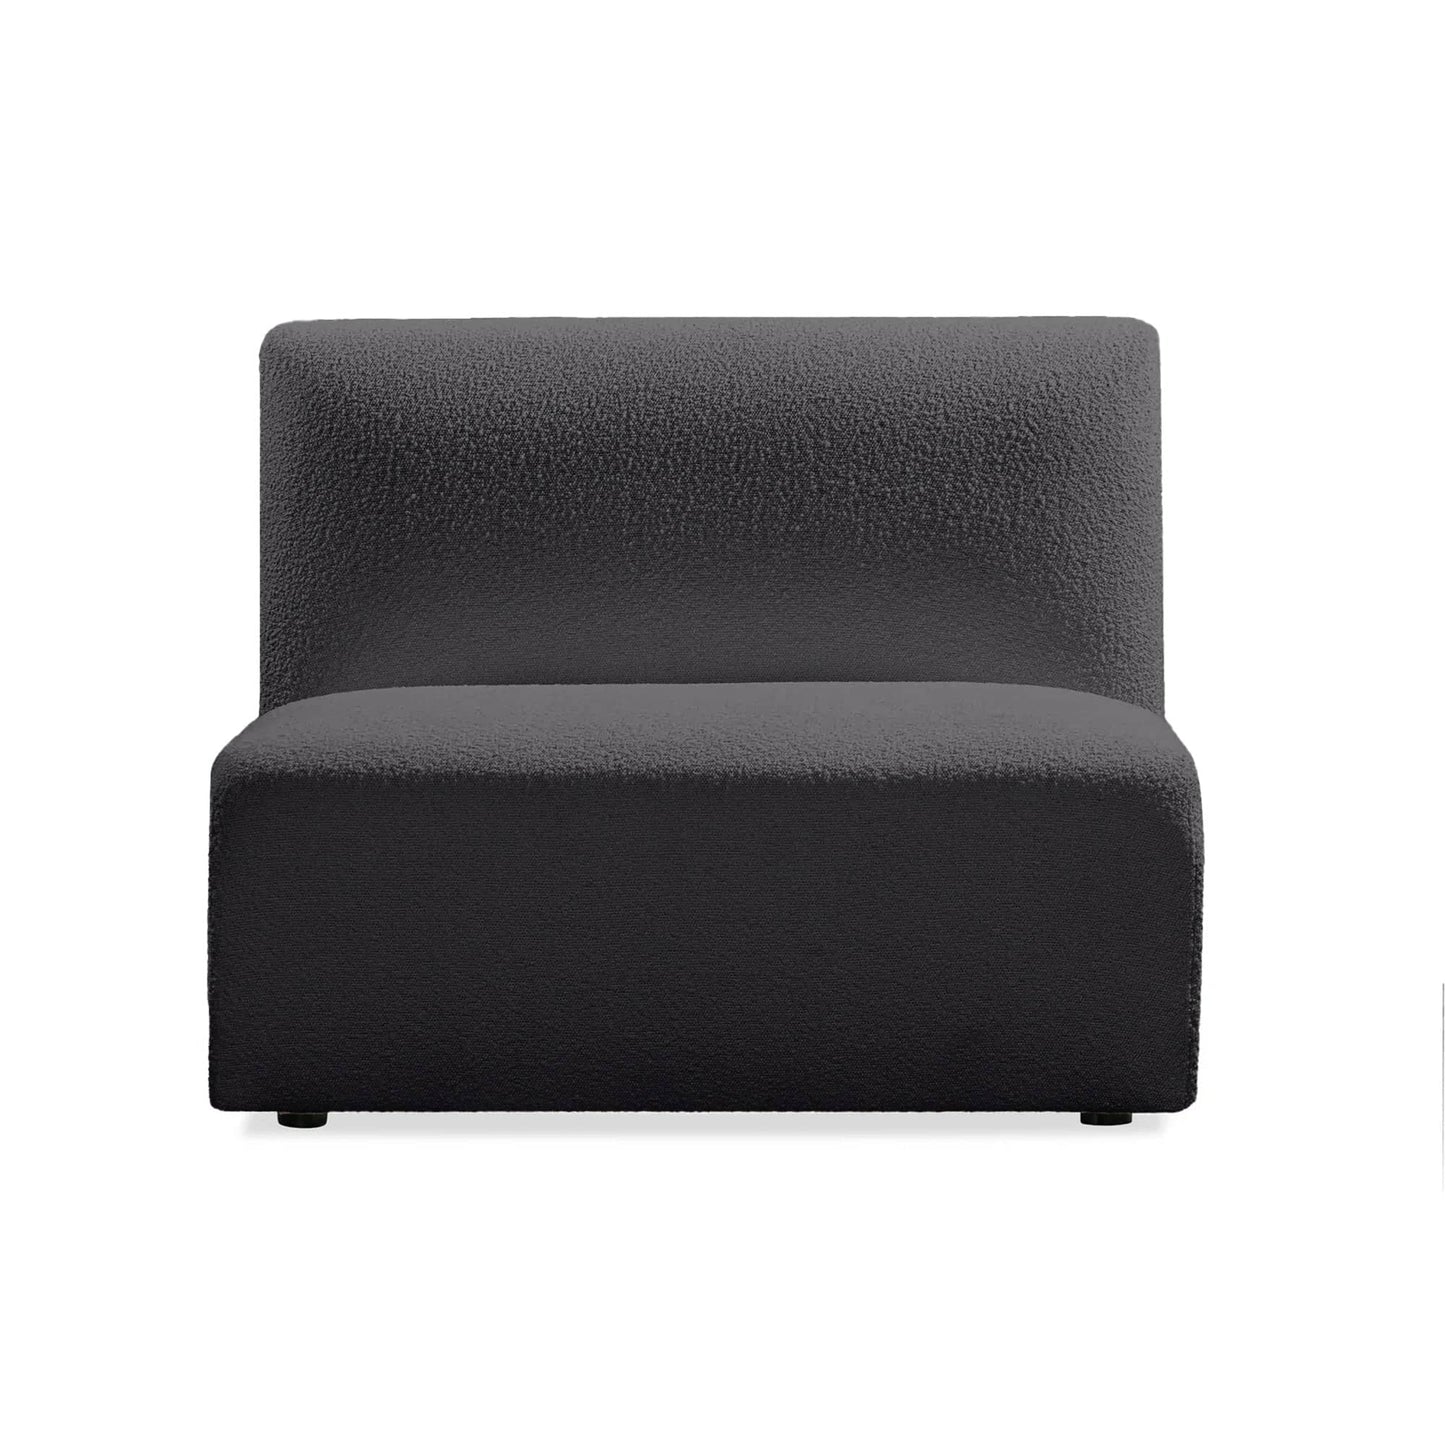 Jam Sofa Large Middle Module - Copenhagen Charcoal